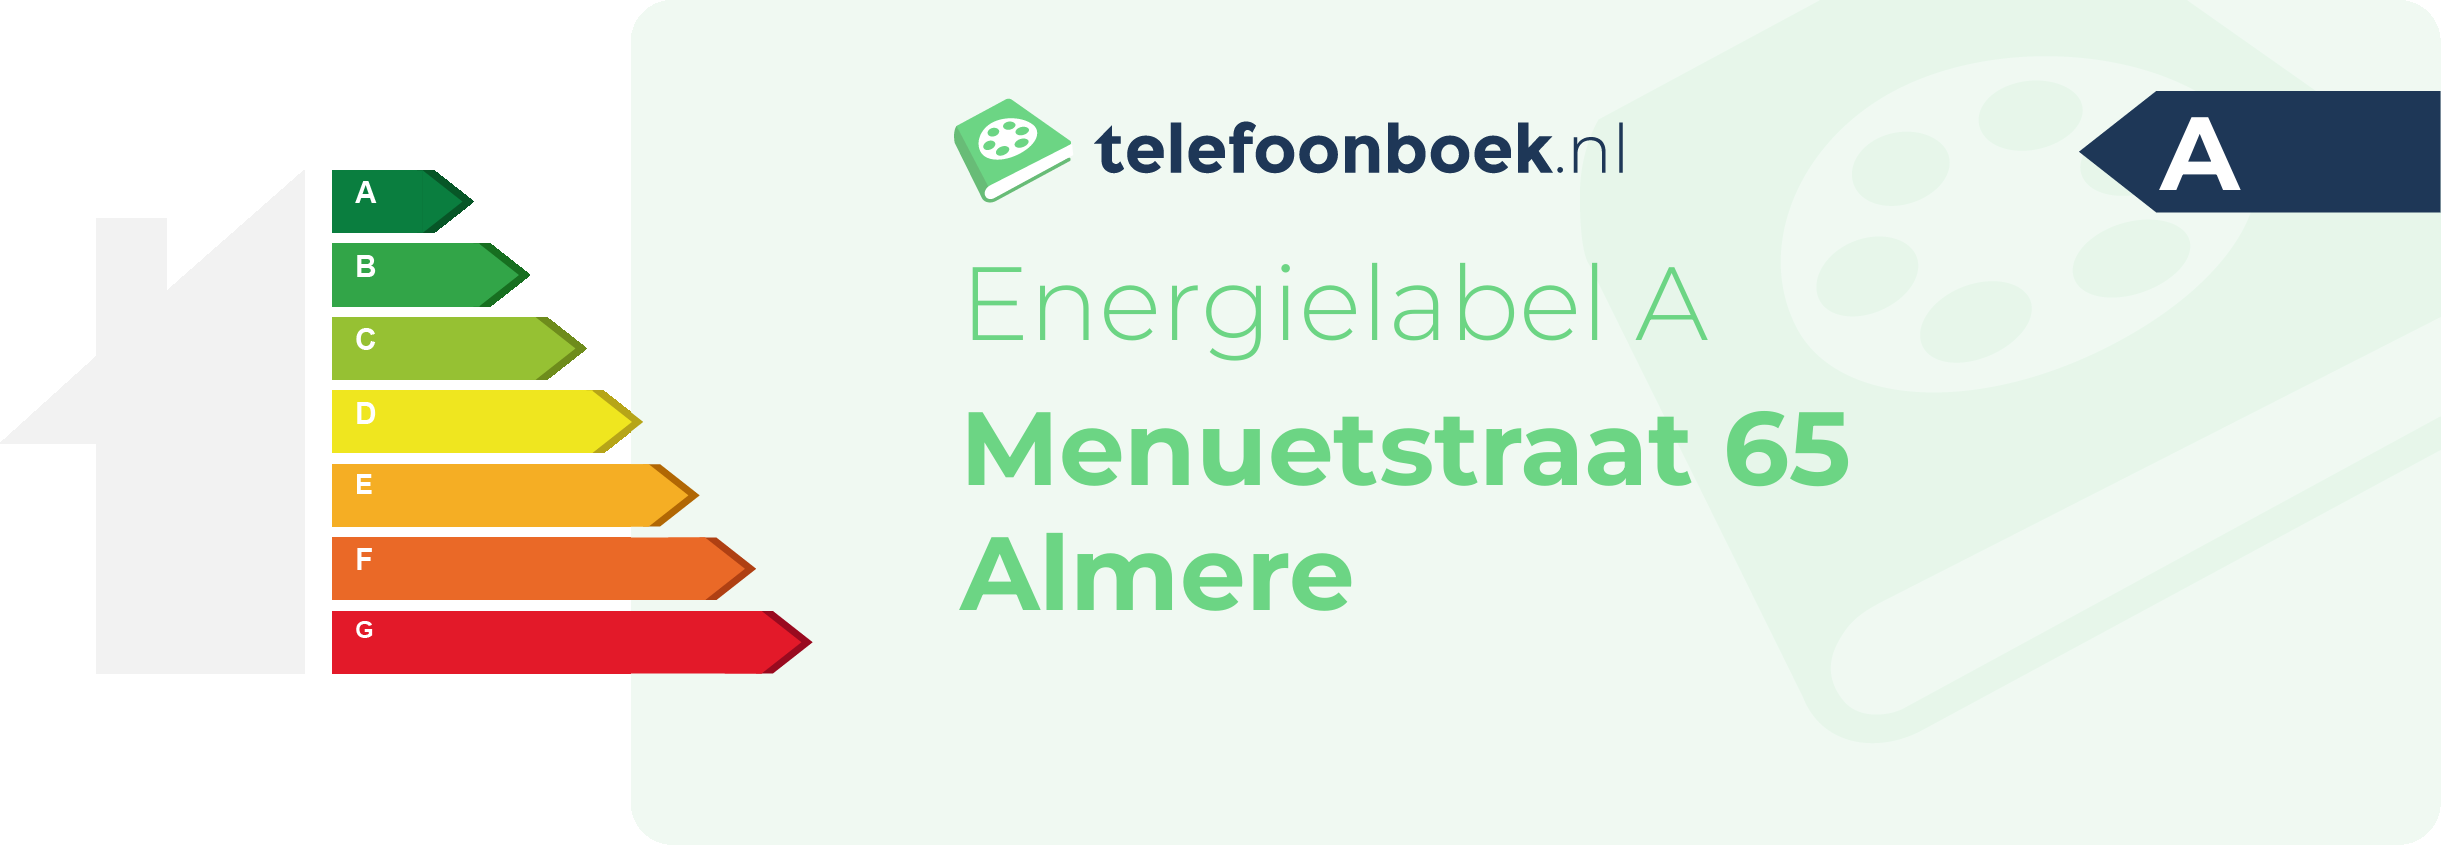 Energielabel Menuetstraat 65 Almere